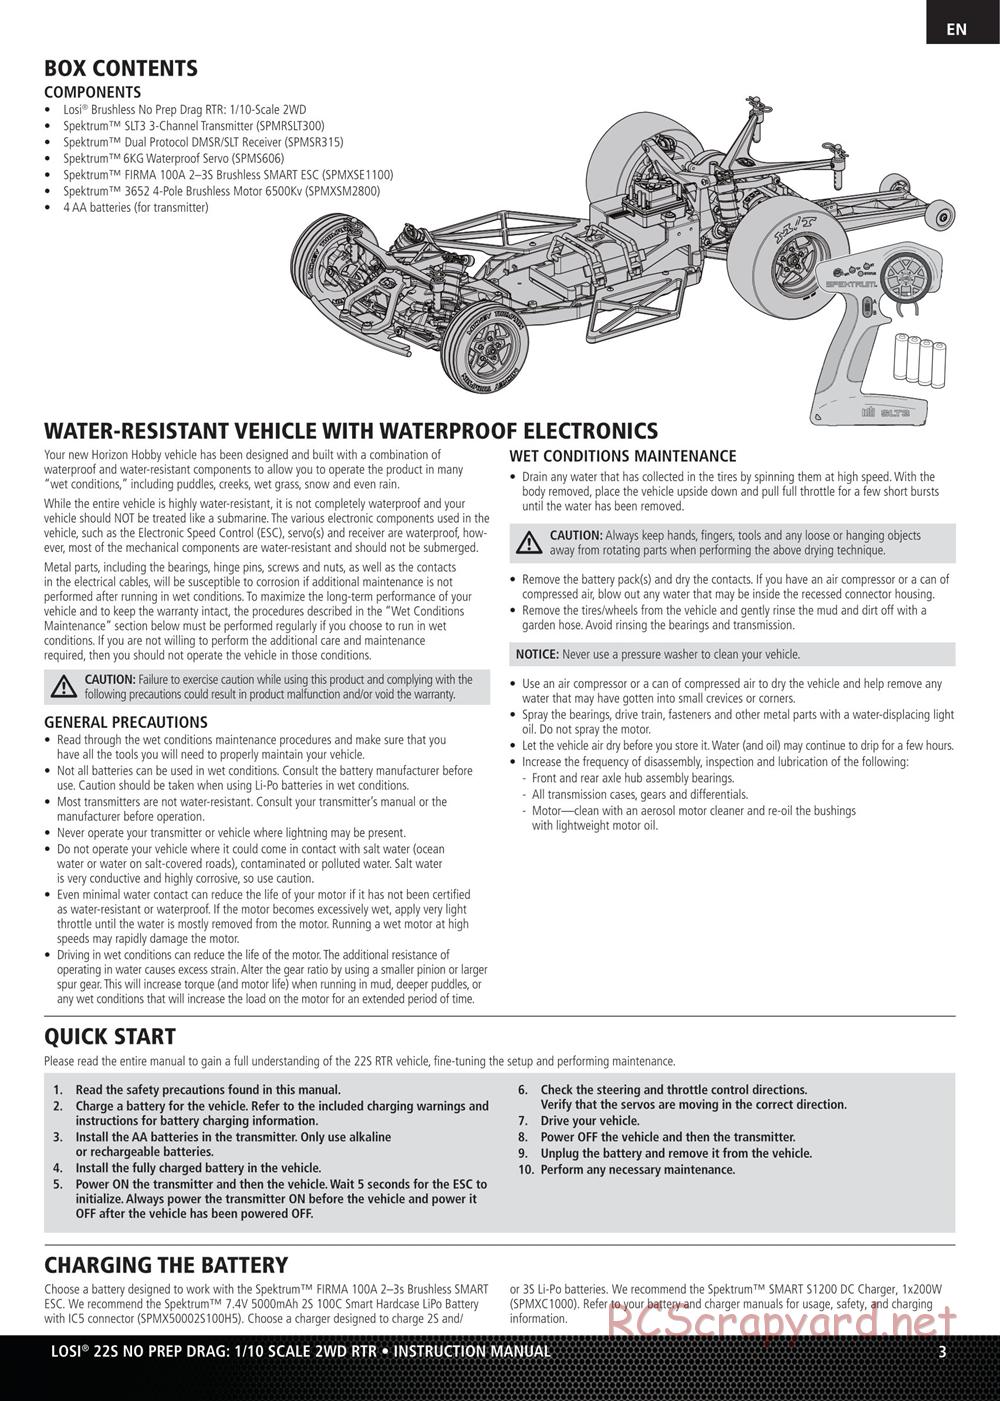 Team Losi - 22S - 69 Camaro Drag Car - Manual - Page 3